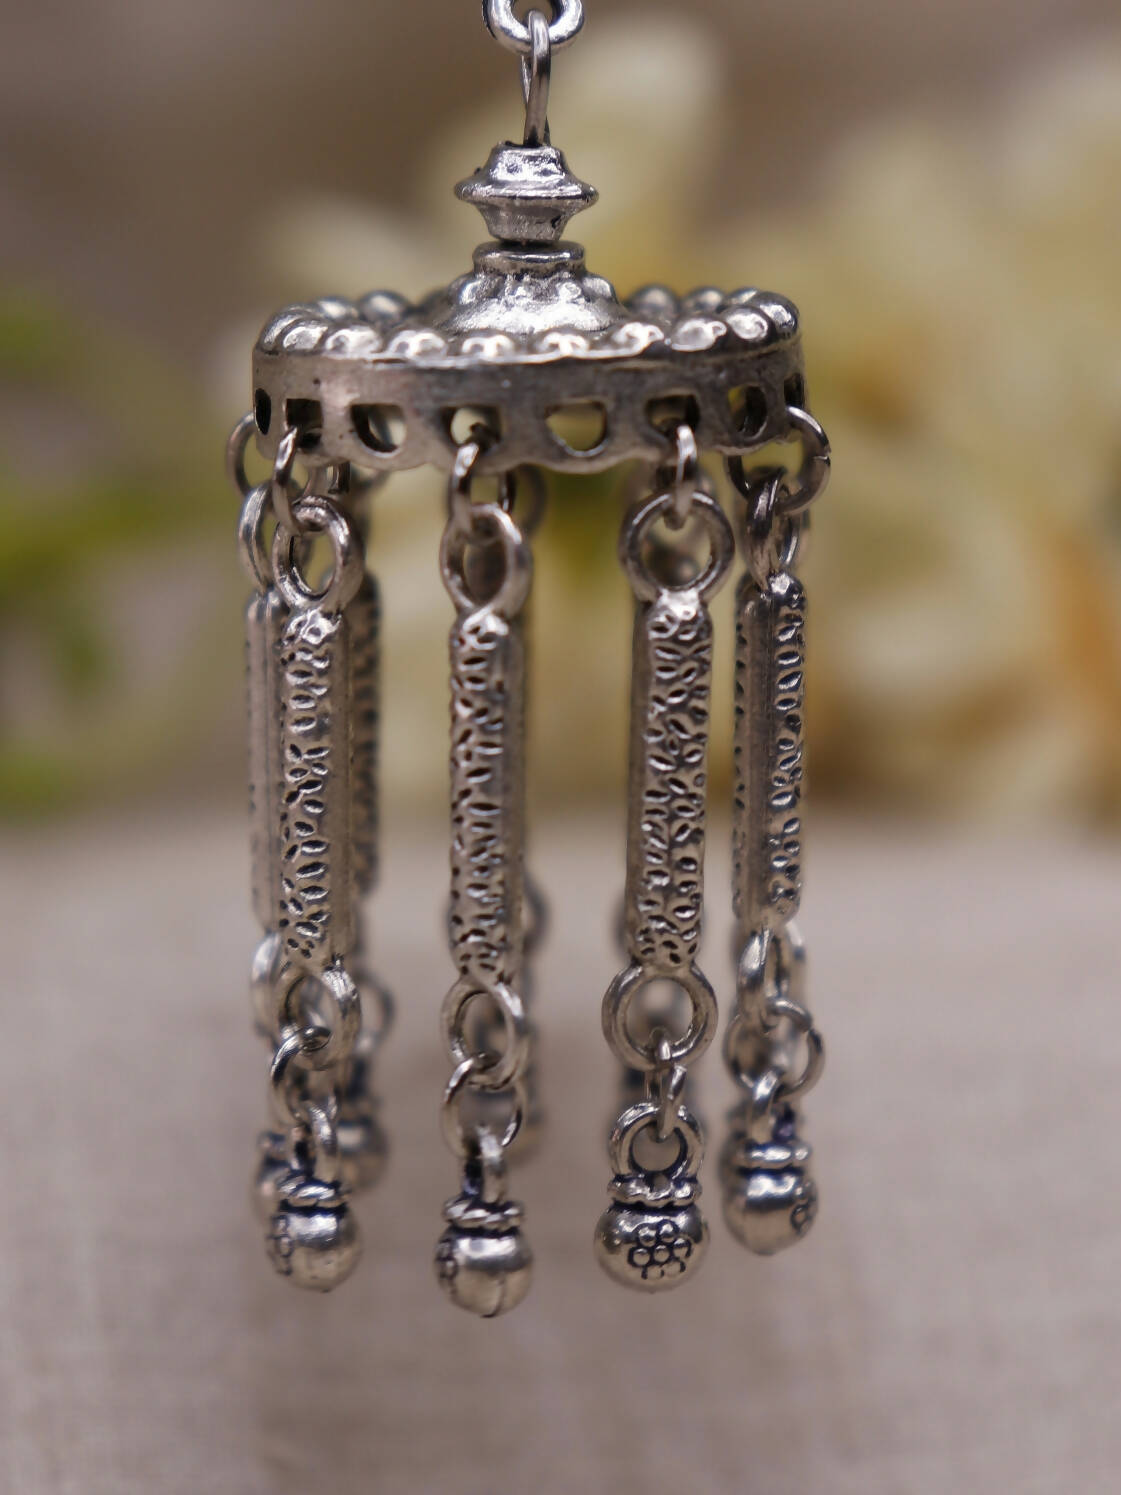 Handmade German silver Oxidized Silver look alike Evening Dinner Party Minimalistic Dangler Earrings - JHANAK